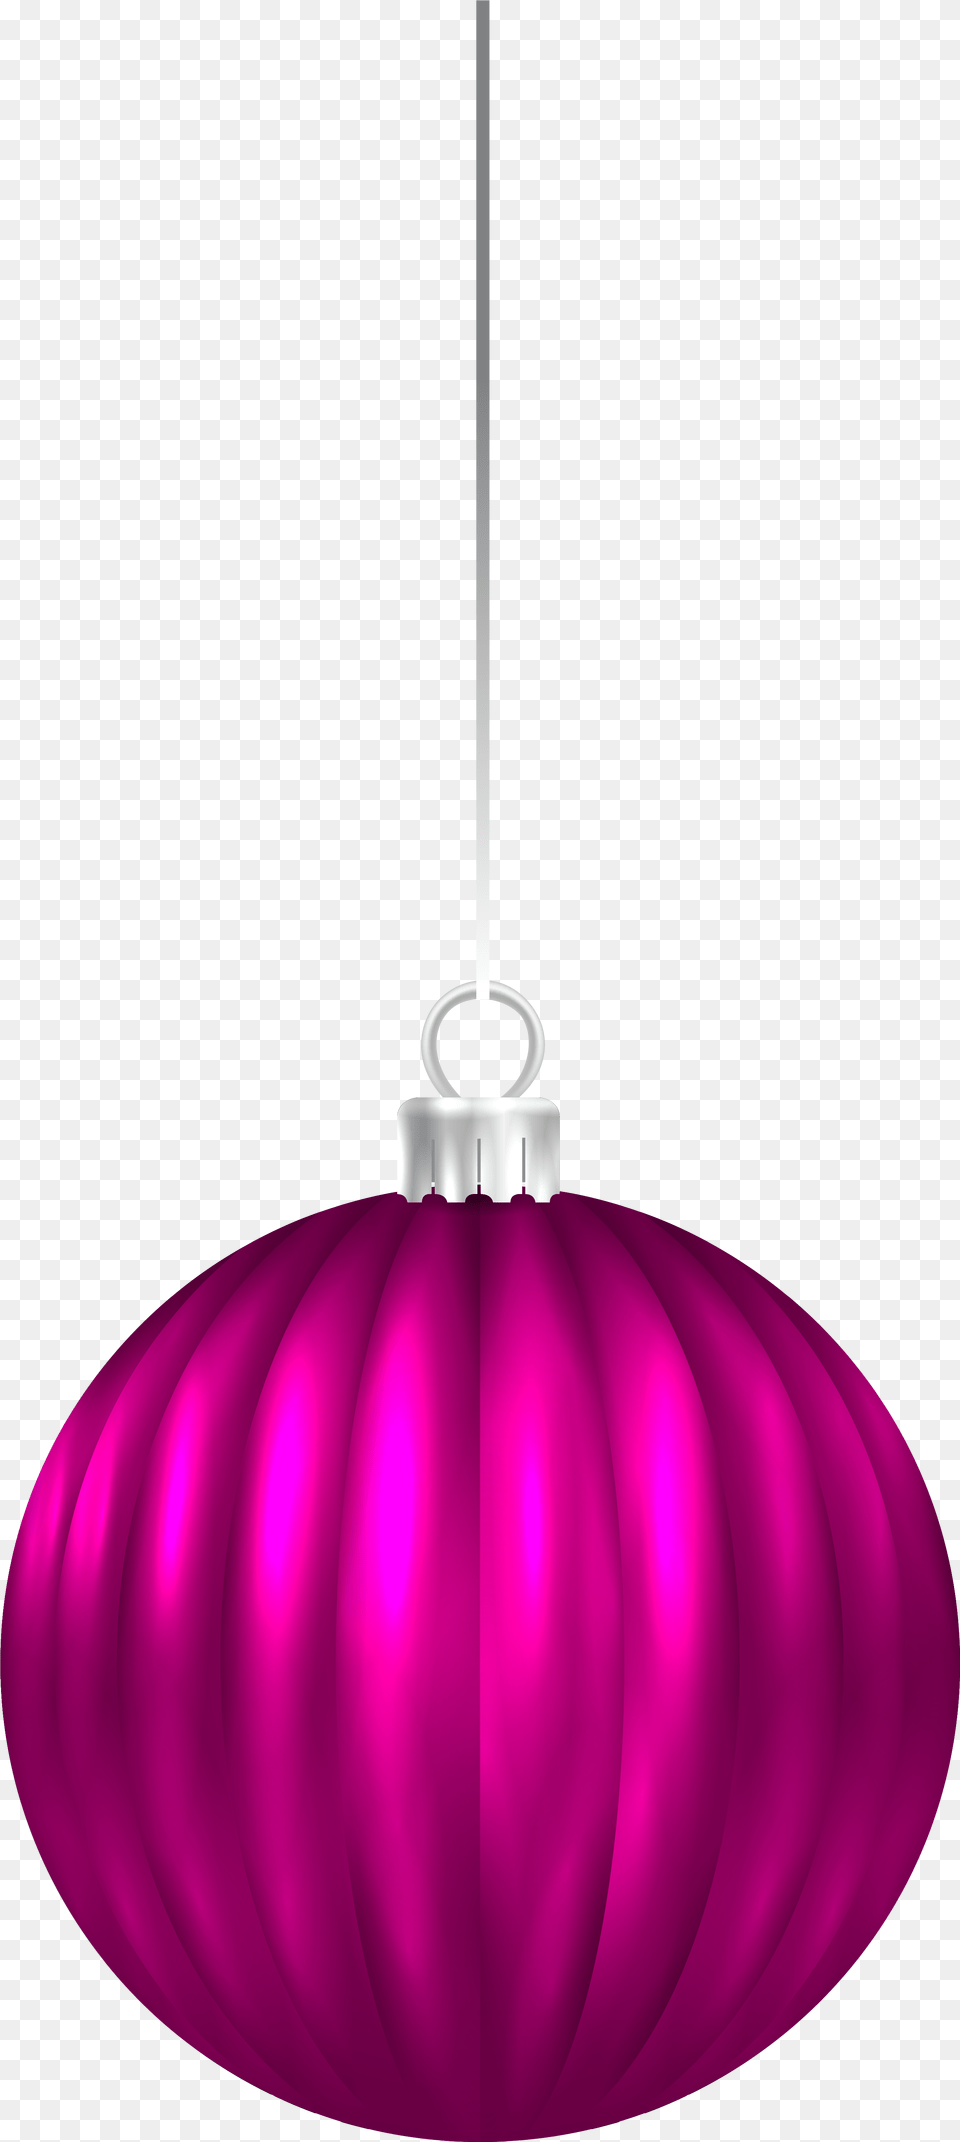 Pink Christmas Ball Ornament Clip Art Image Pink Christmas Ball, Lamp, Lighting, Accessories, Lampshade Png